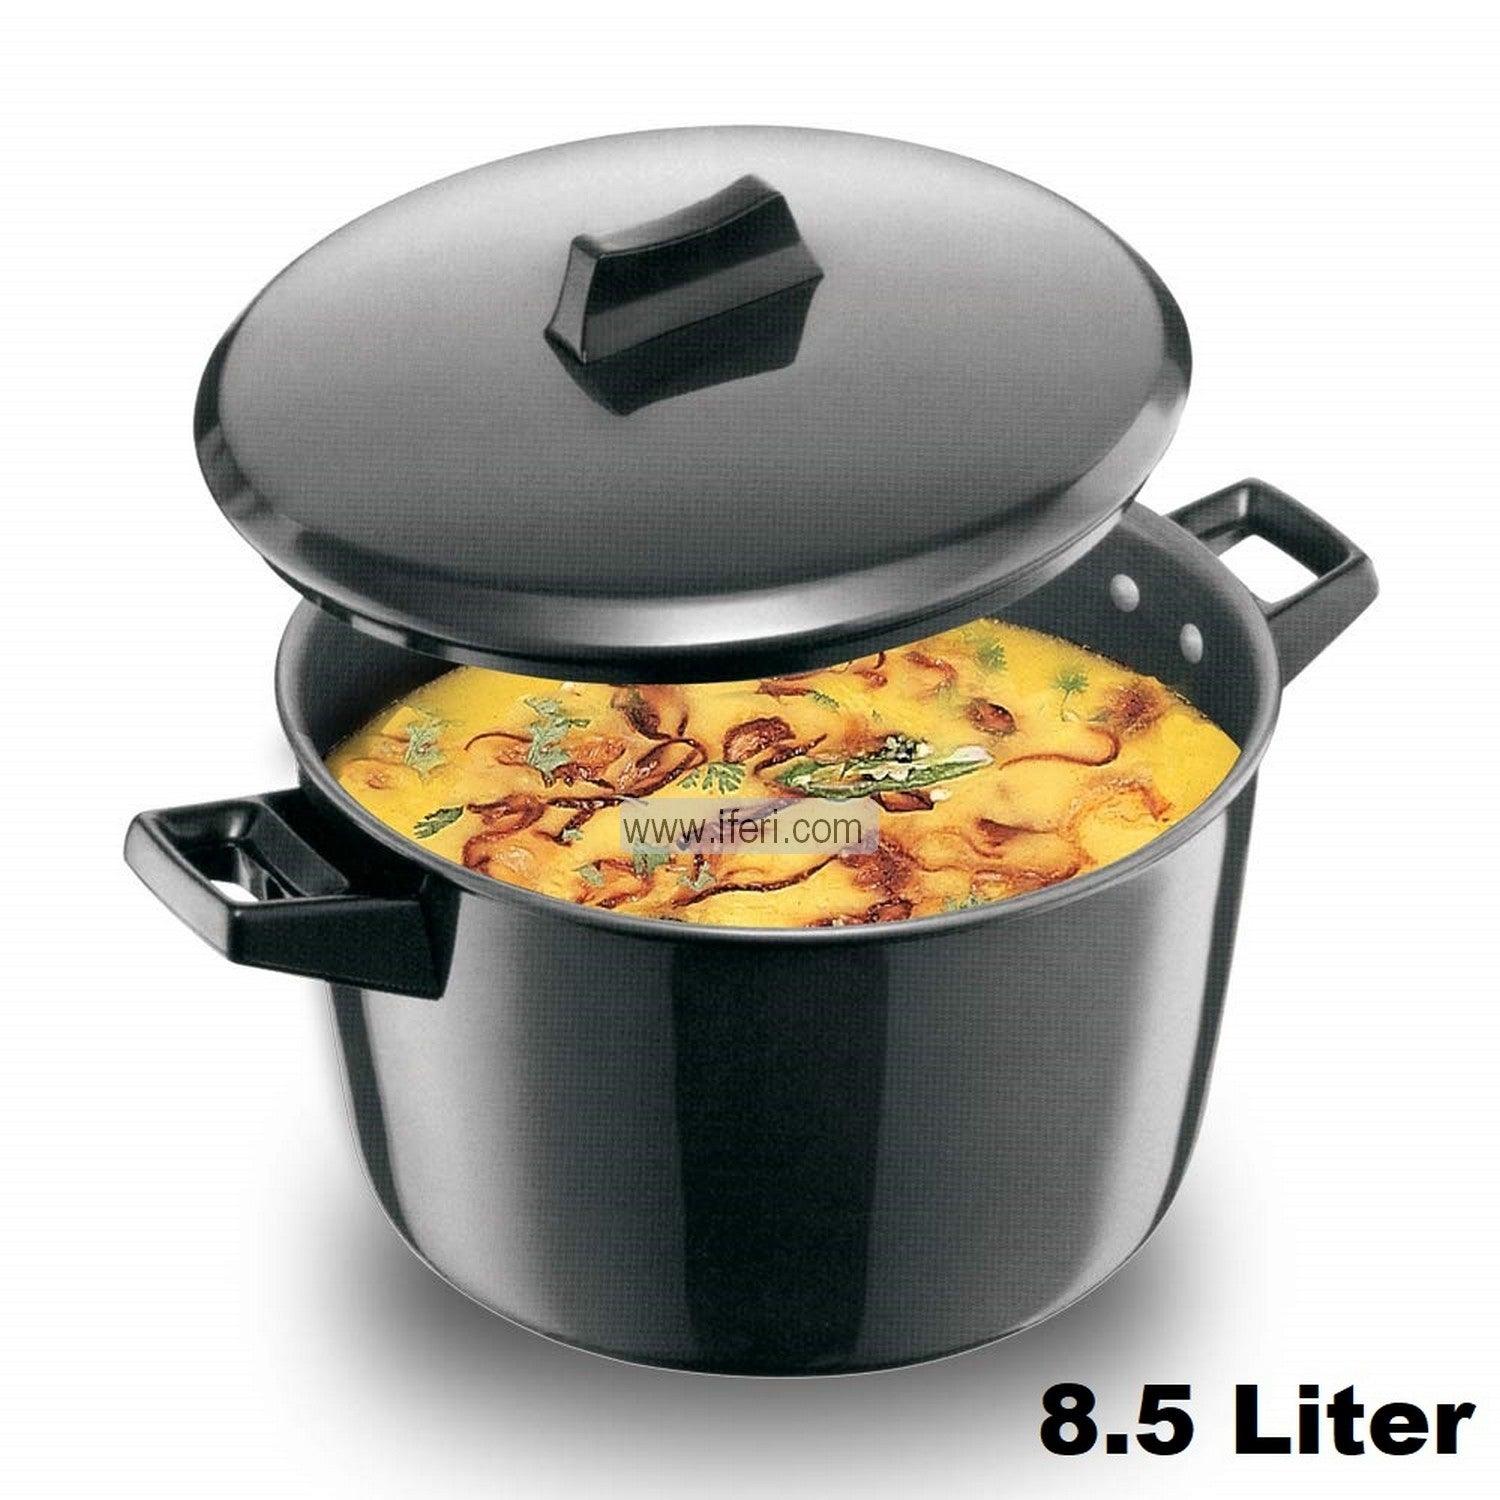 8.5 Liter Futura Hard Anodised Sauce Pan MBT9872-1 Price in Bangladesh - iferi.com